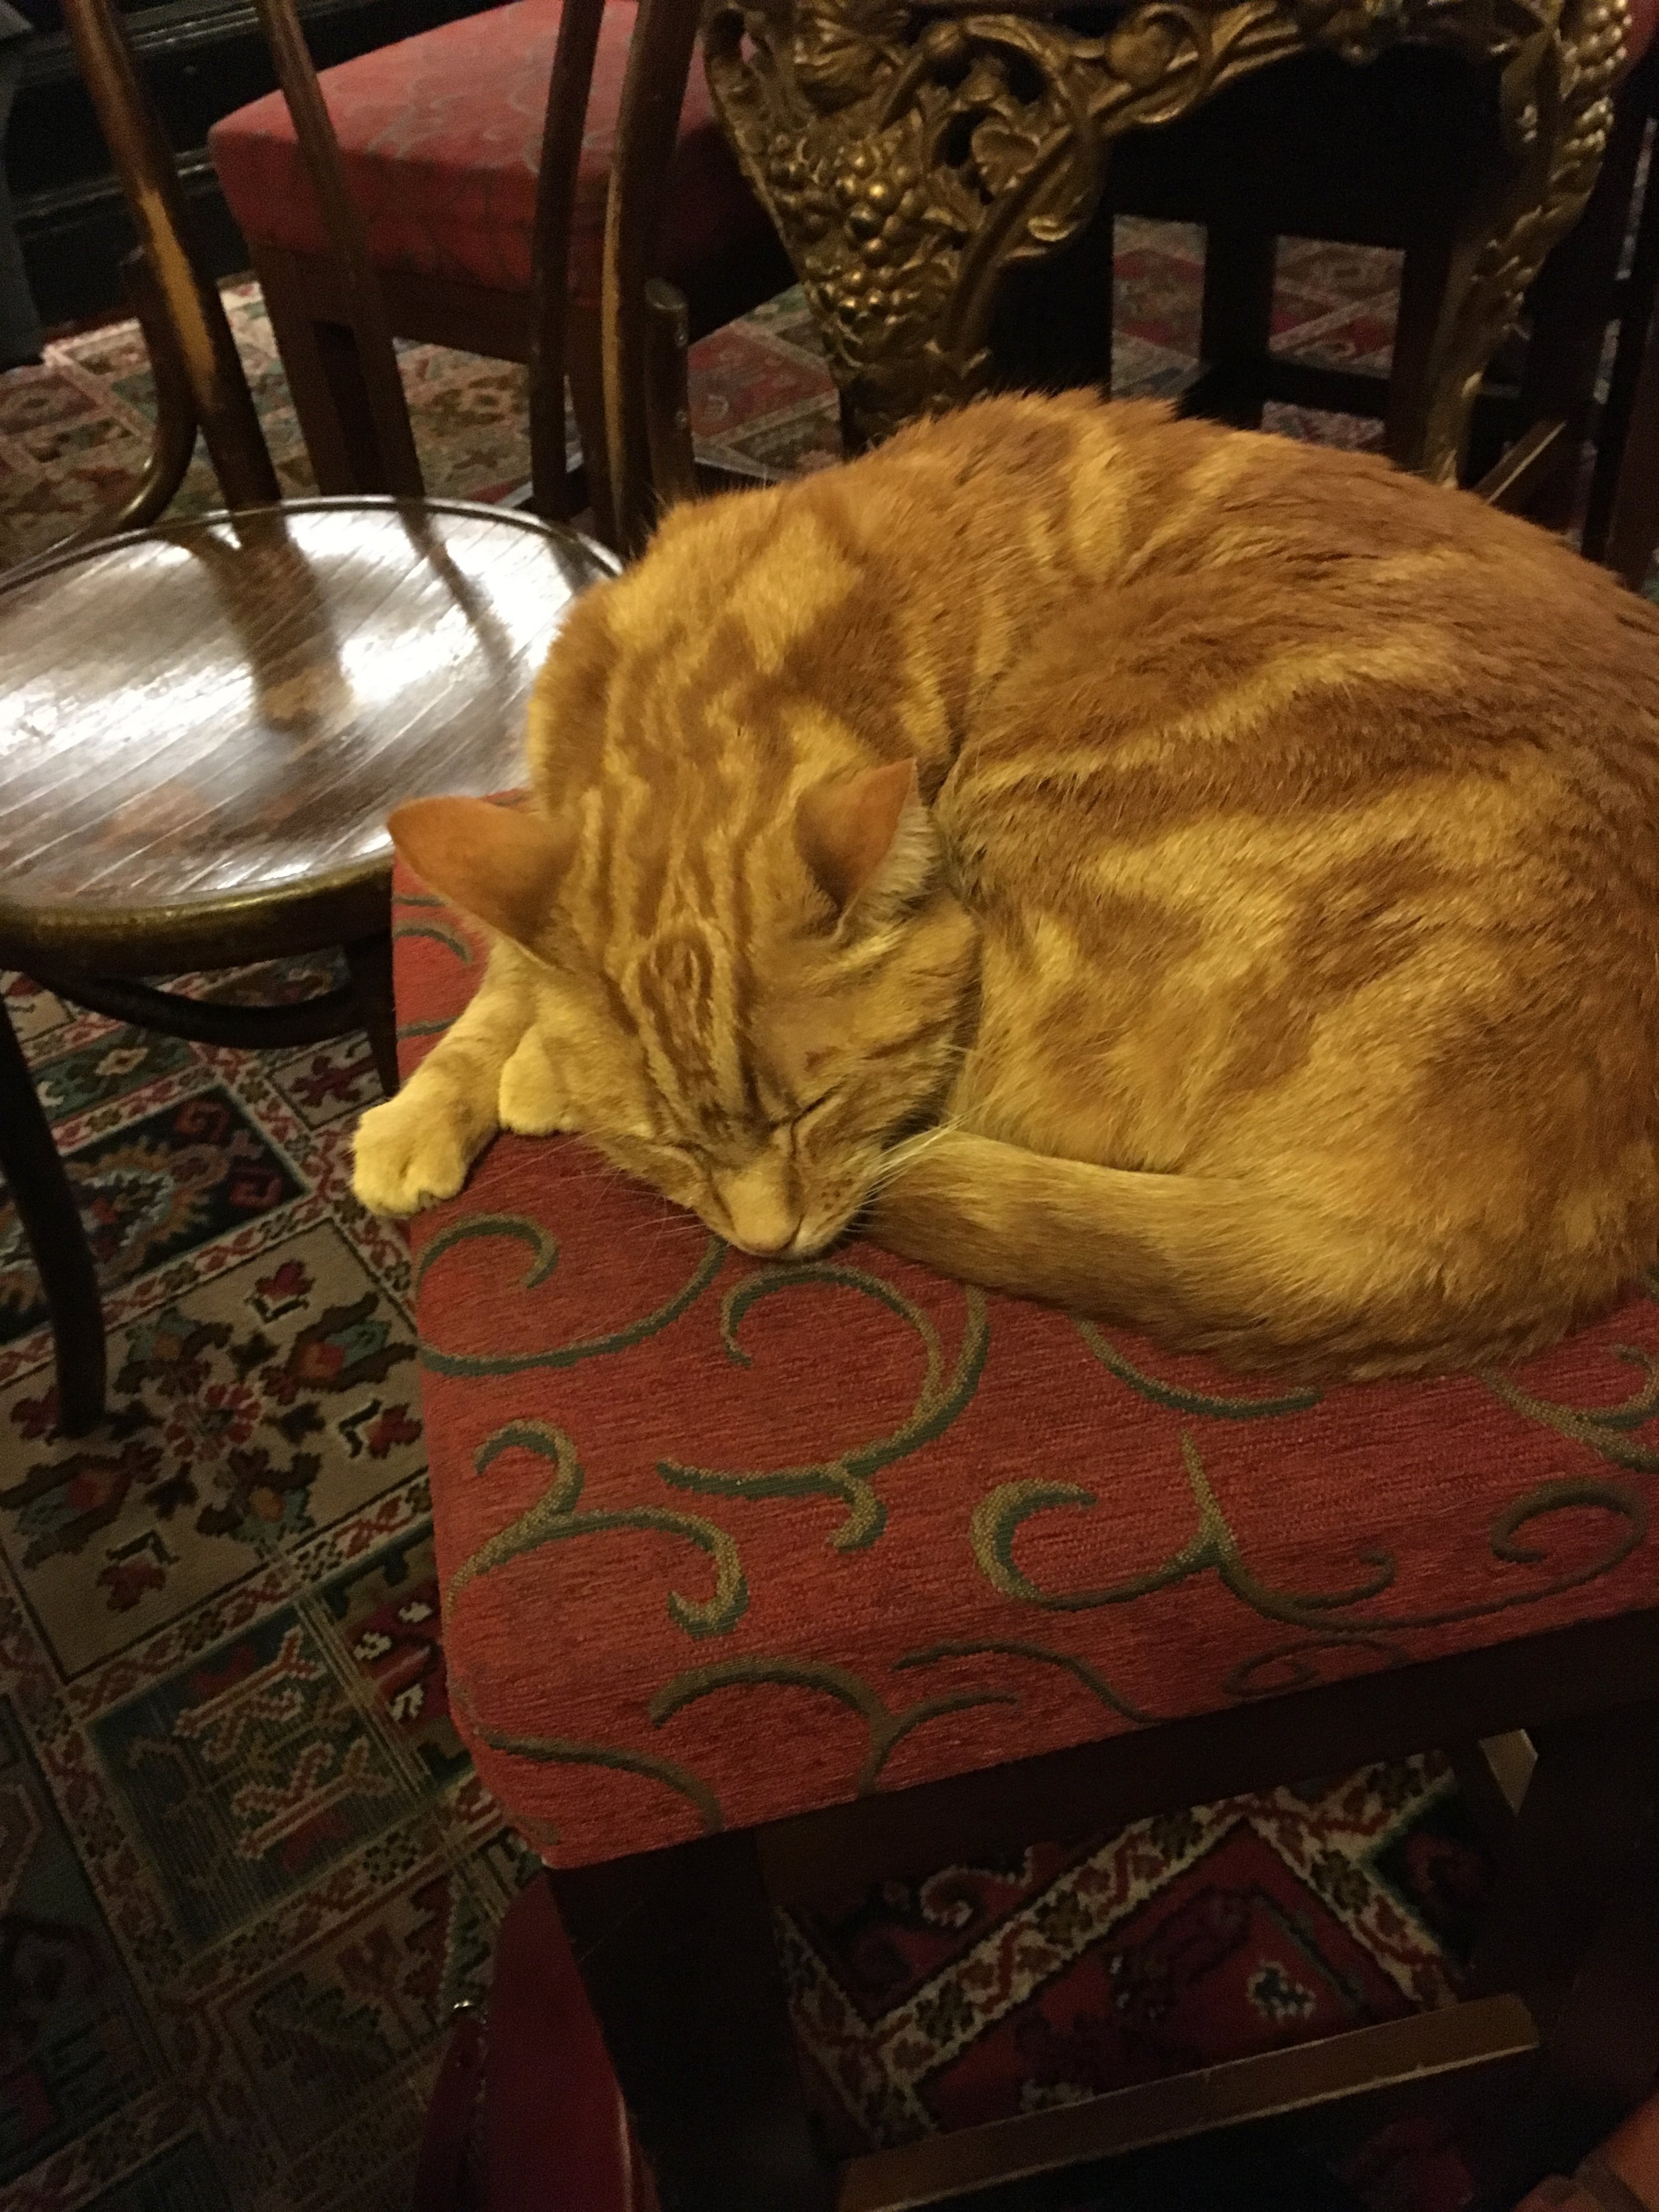 The Alex's pub cat Tommy